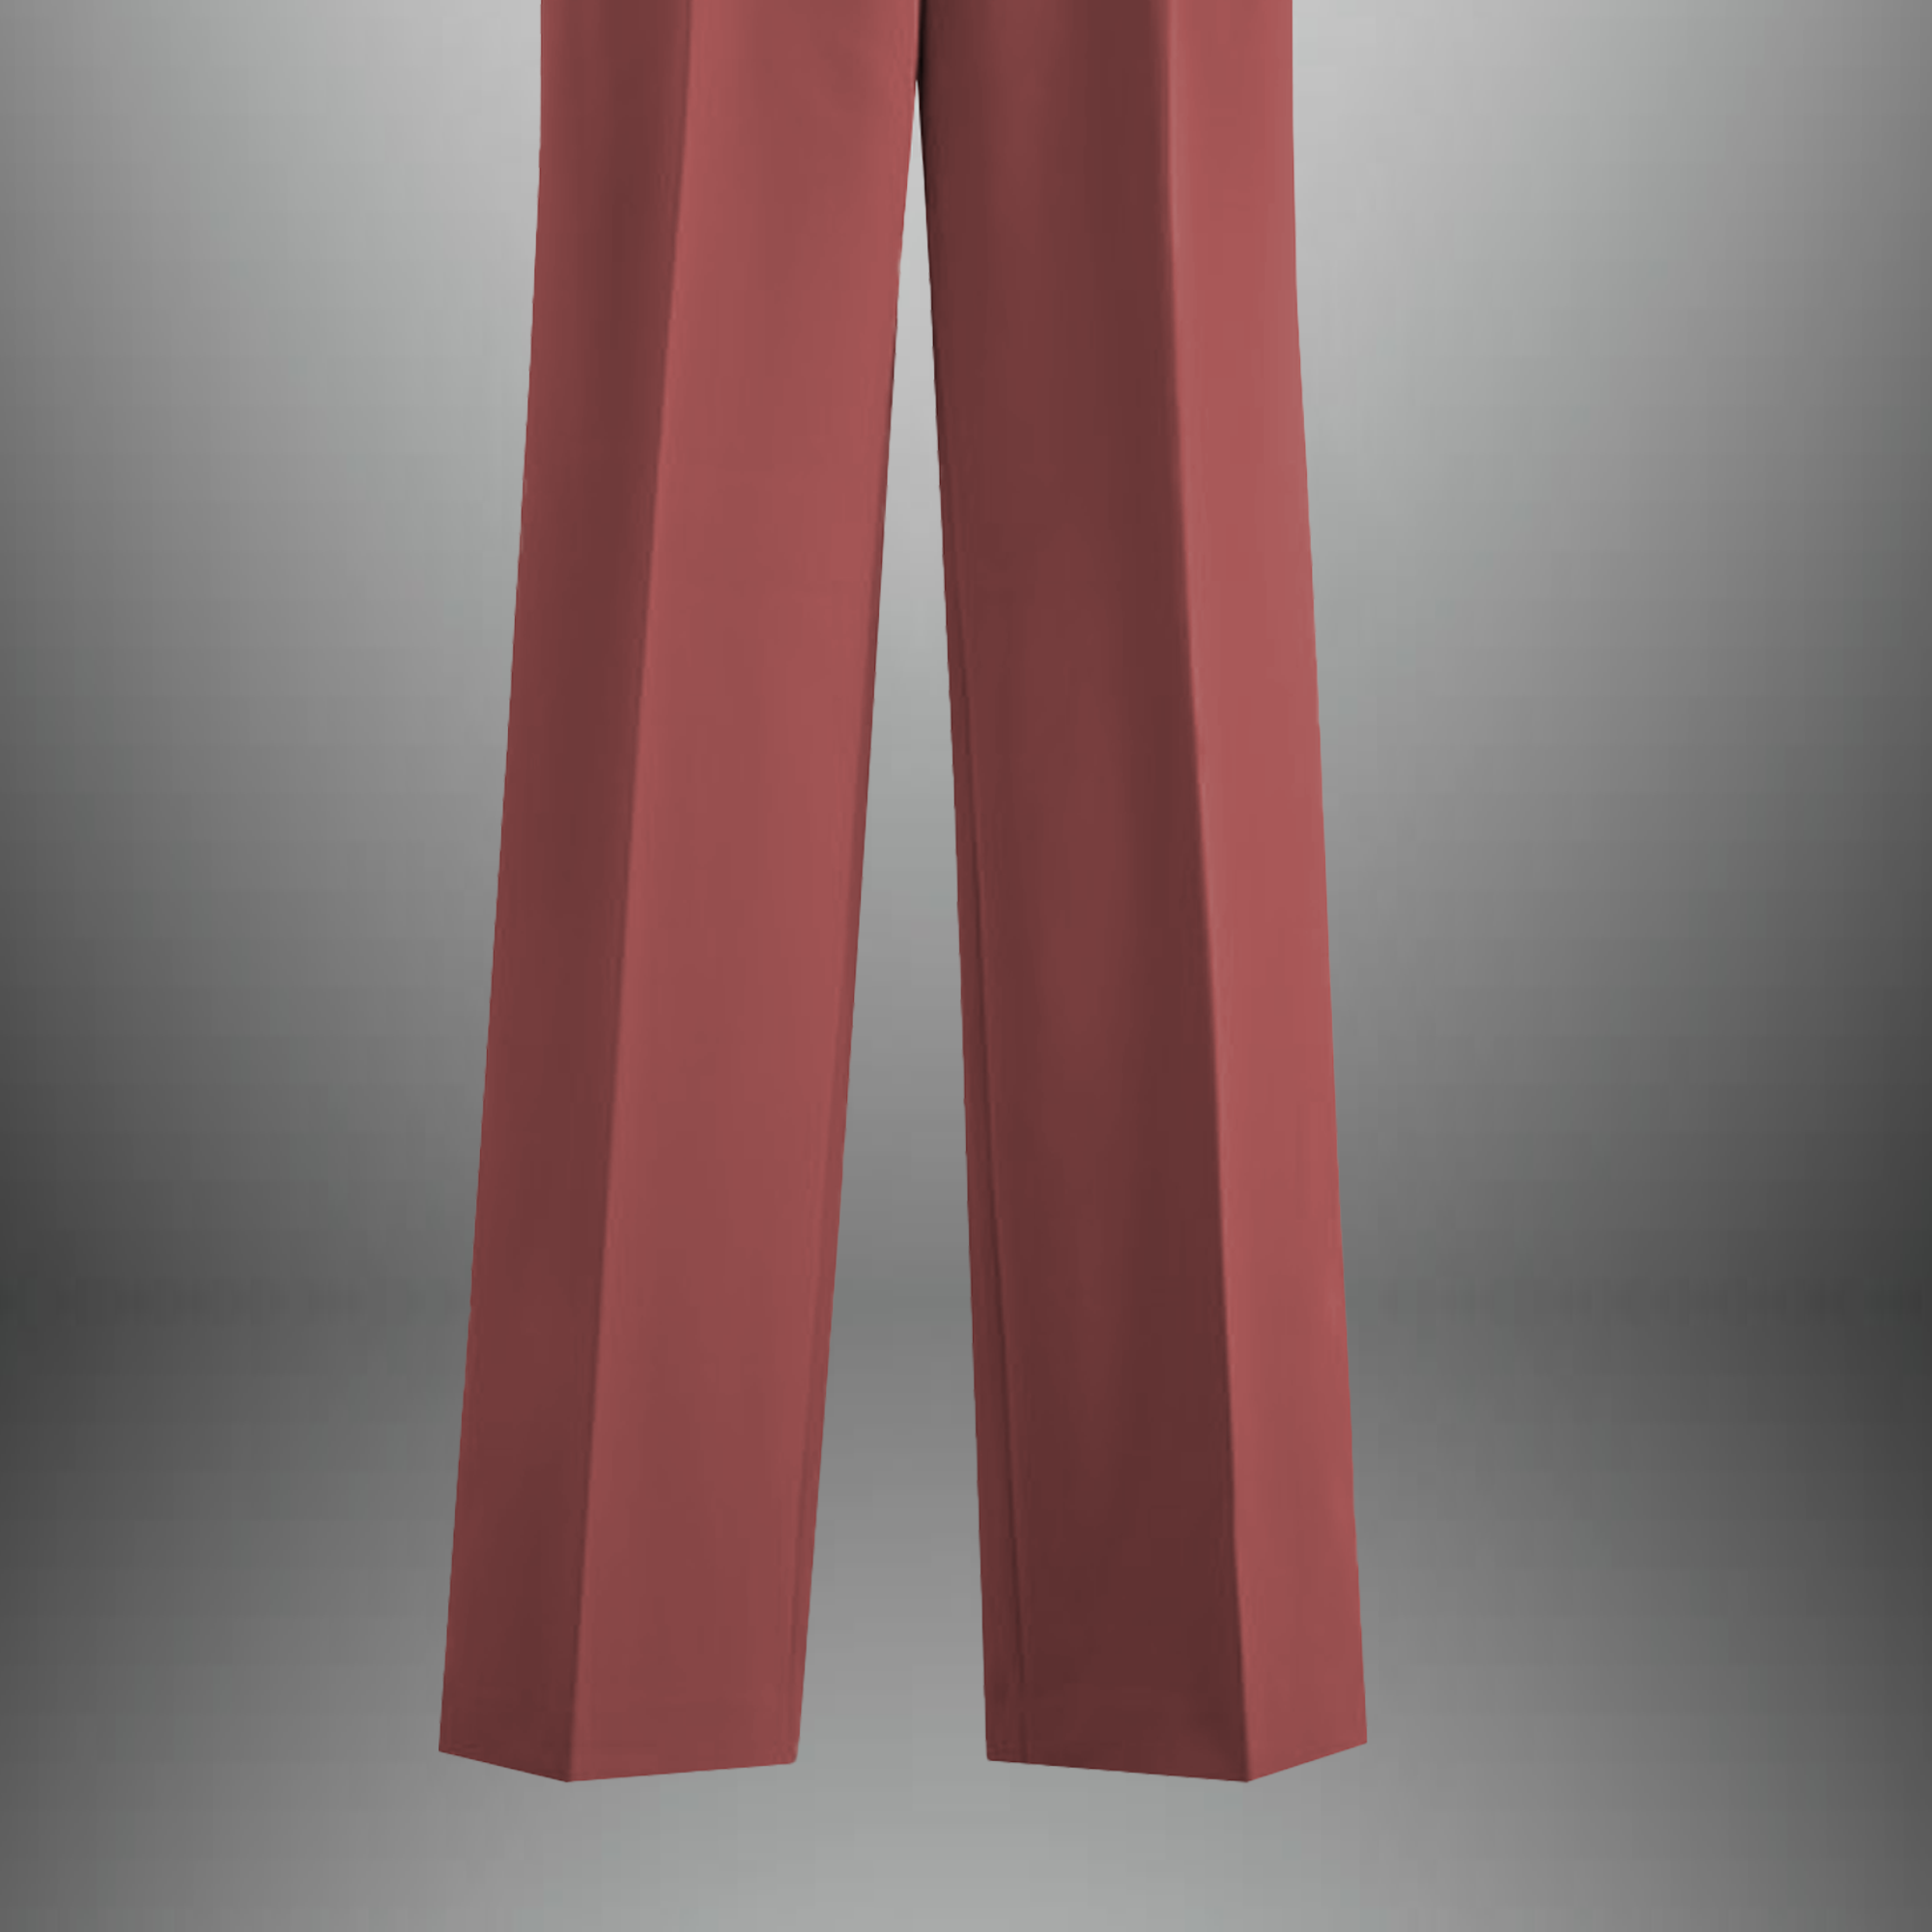 Women's Brick red semi formal trouser-RCP024